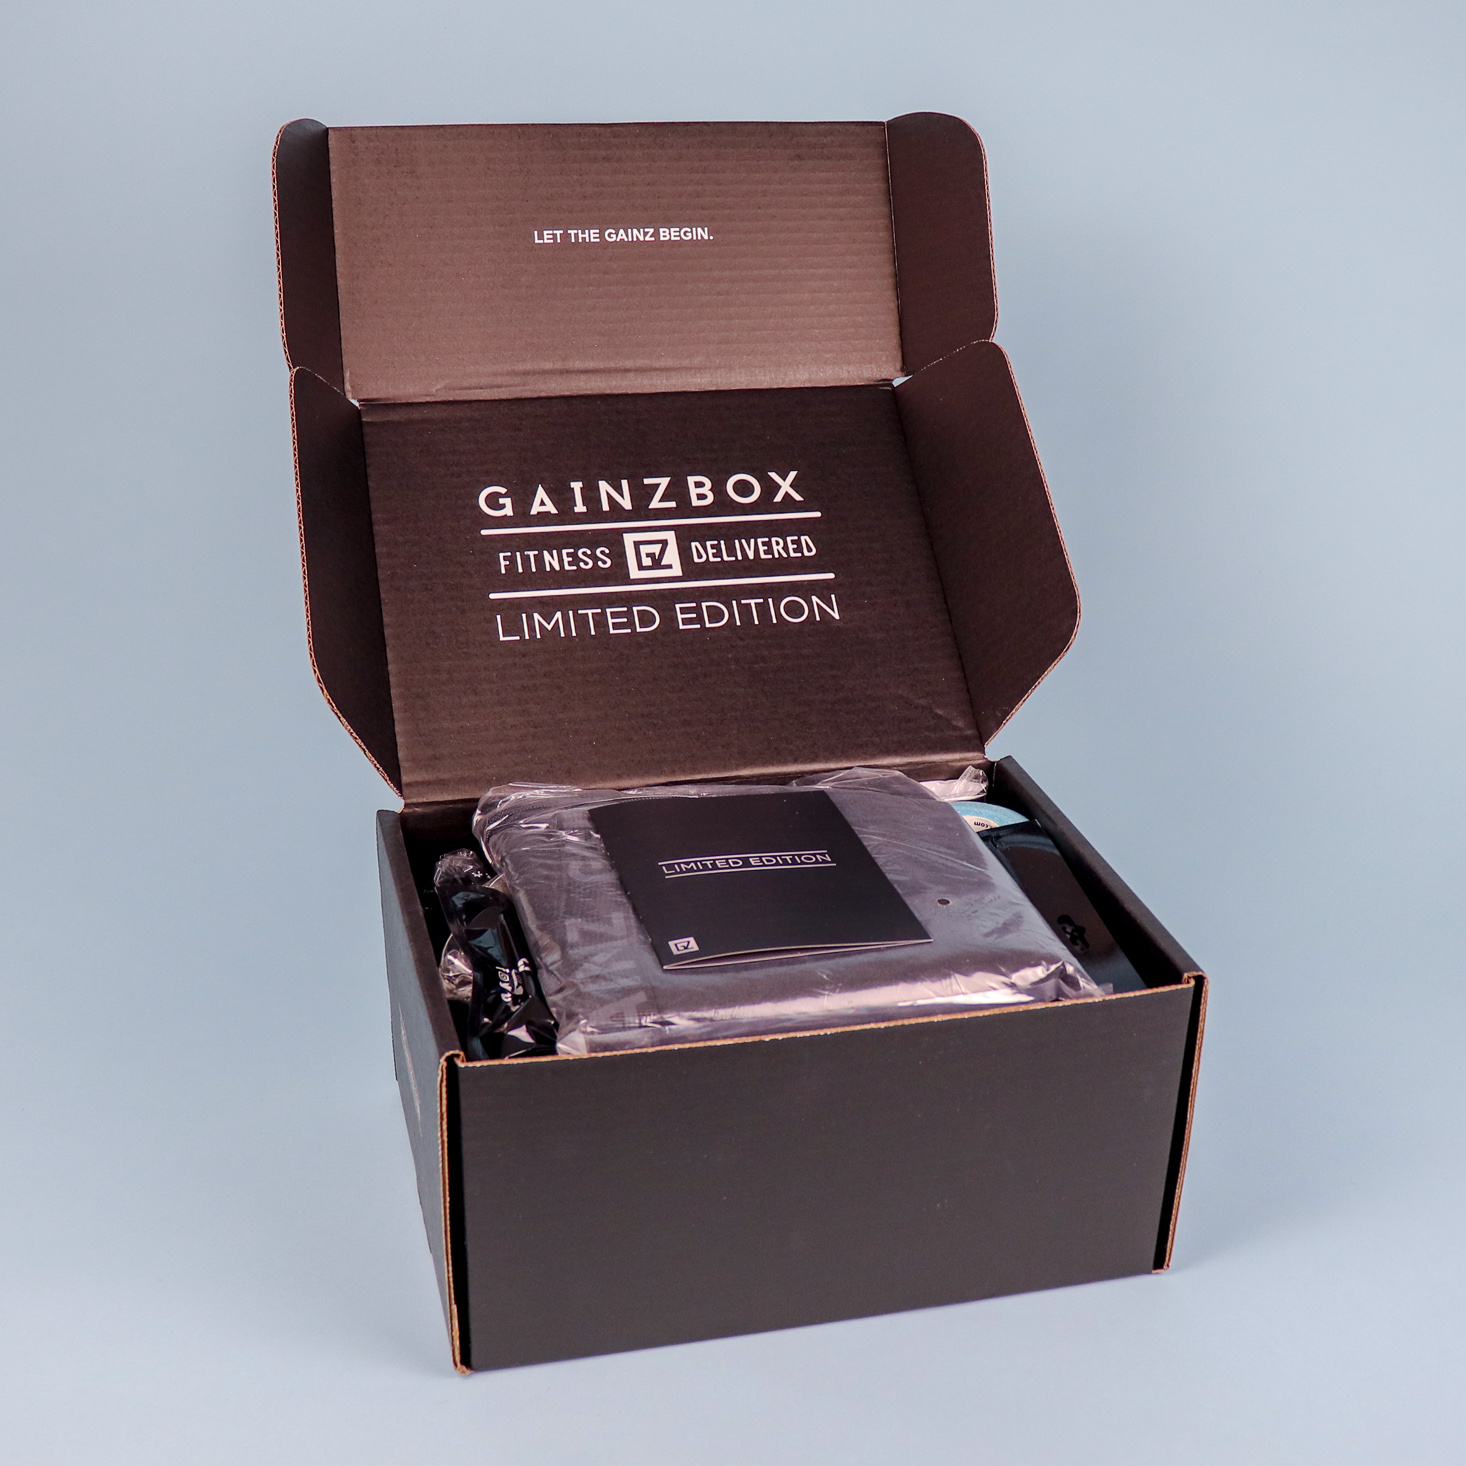 Gainz Box Limited Edition Box Review – November 2018